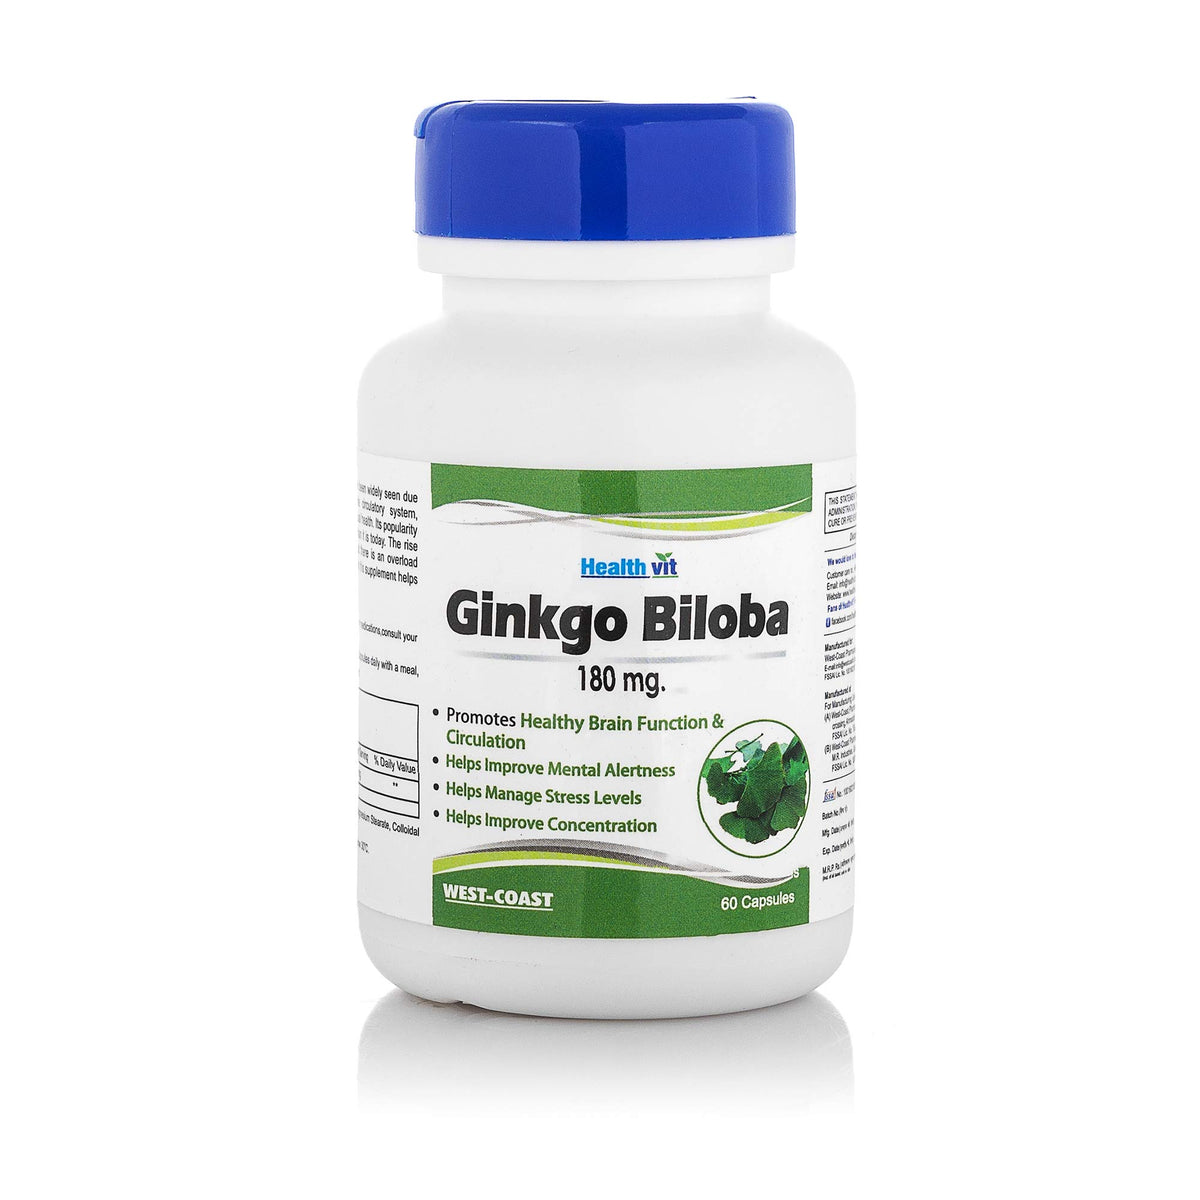 Healthvit Ginkgo Biloba 180mg For Healthy Brain Function | Manage Stress Levels | Improve Mental Alertness | Improve Concentration - 60 Capsules